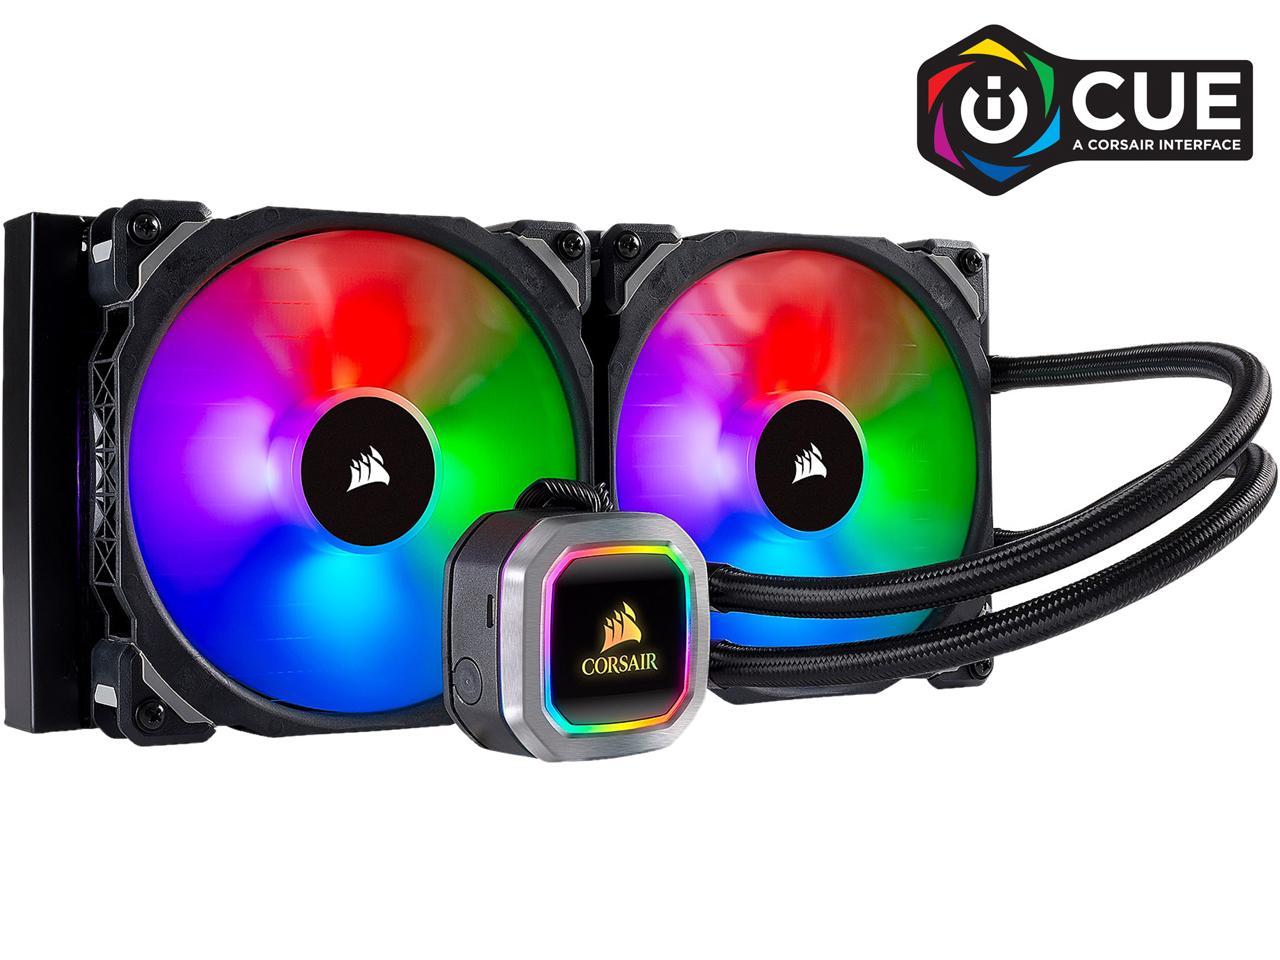 CORSAIR H115i RGB Platinum 280mm AIO Liquid CPU Cooler *RFB* @Newegg (AR) $69